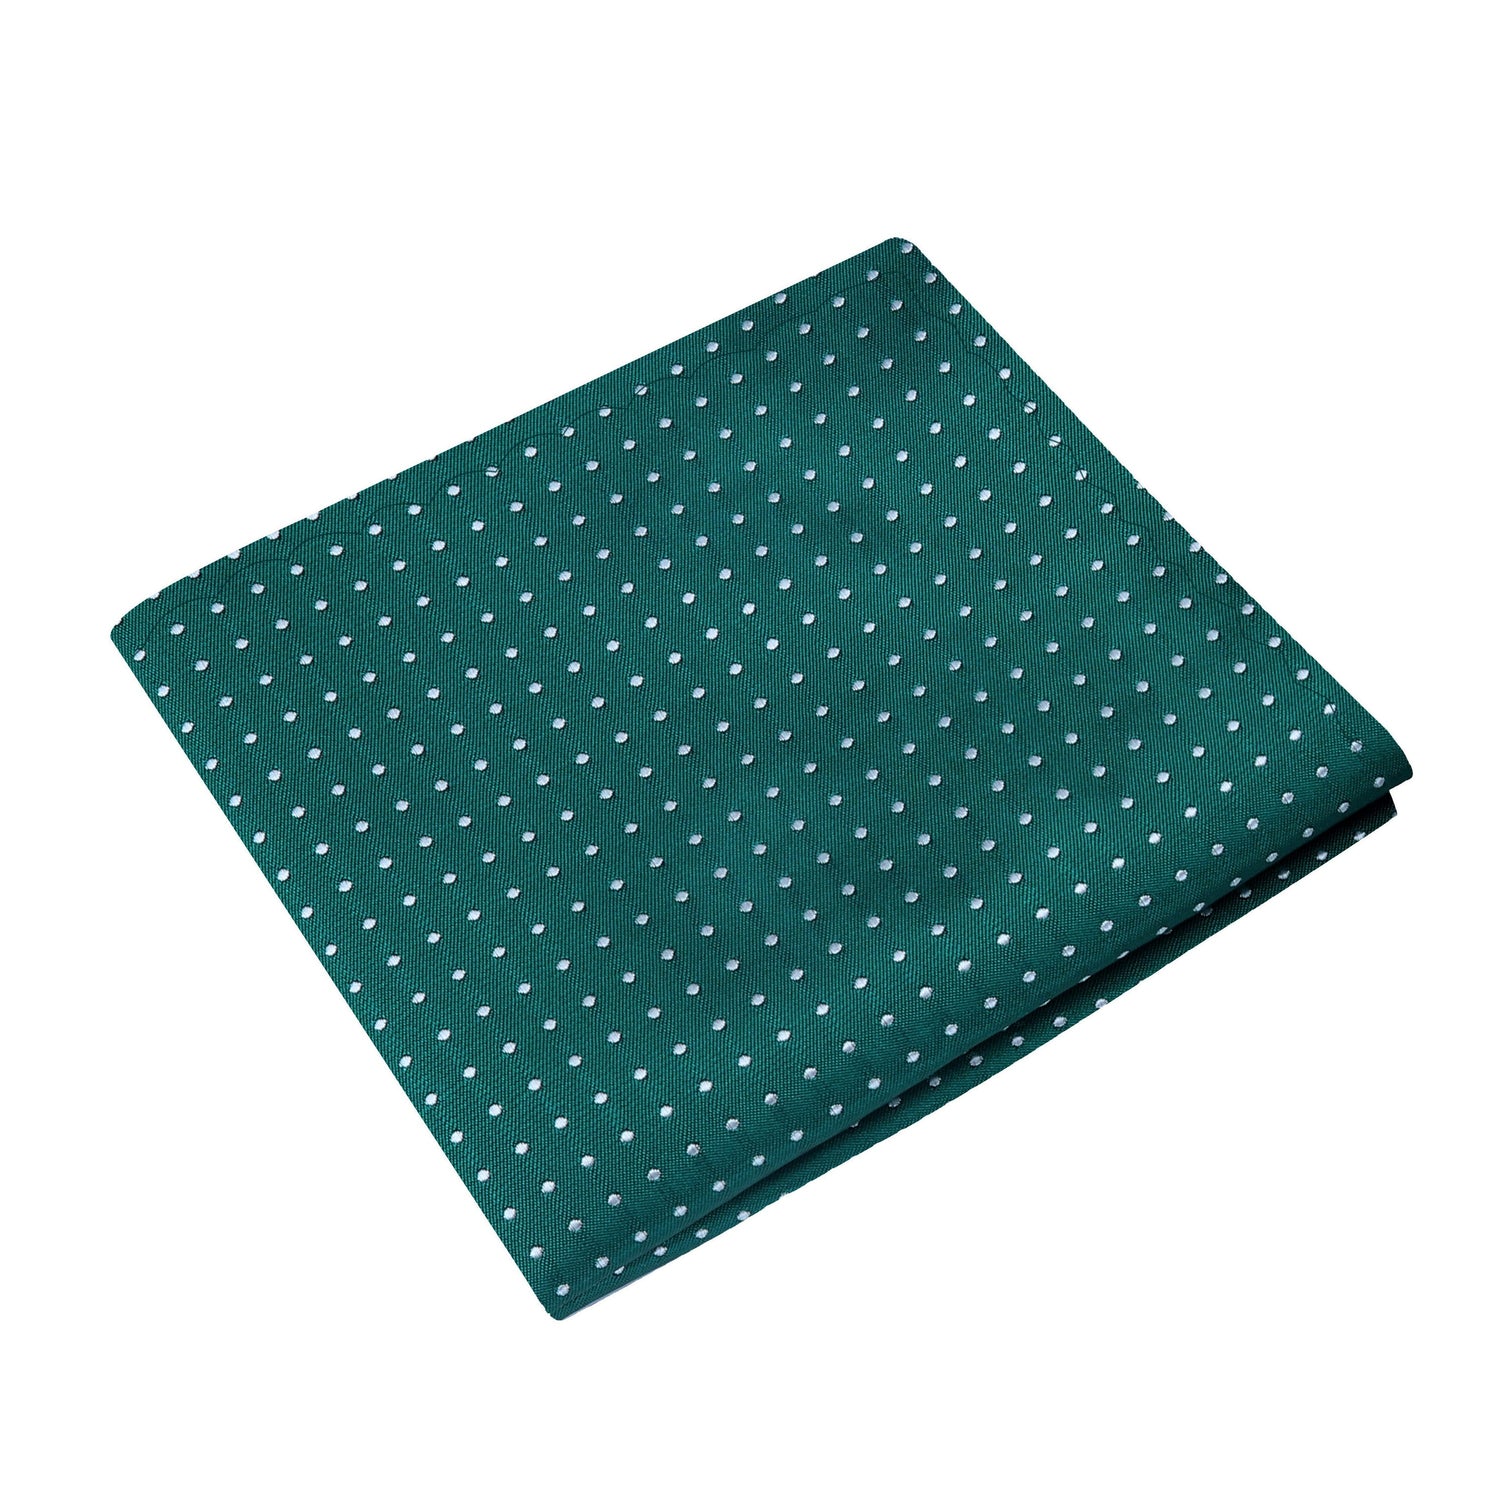 A Green with White Polka Dot Pattern Silk Pocket Square